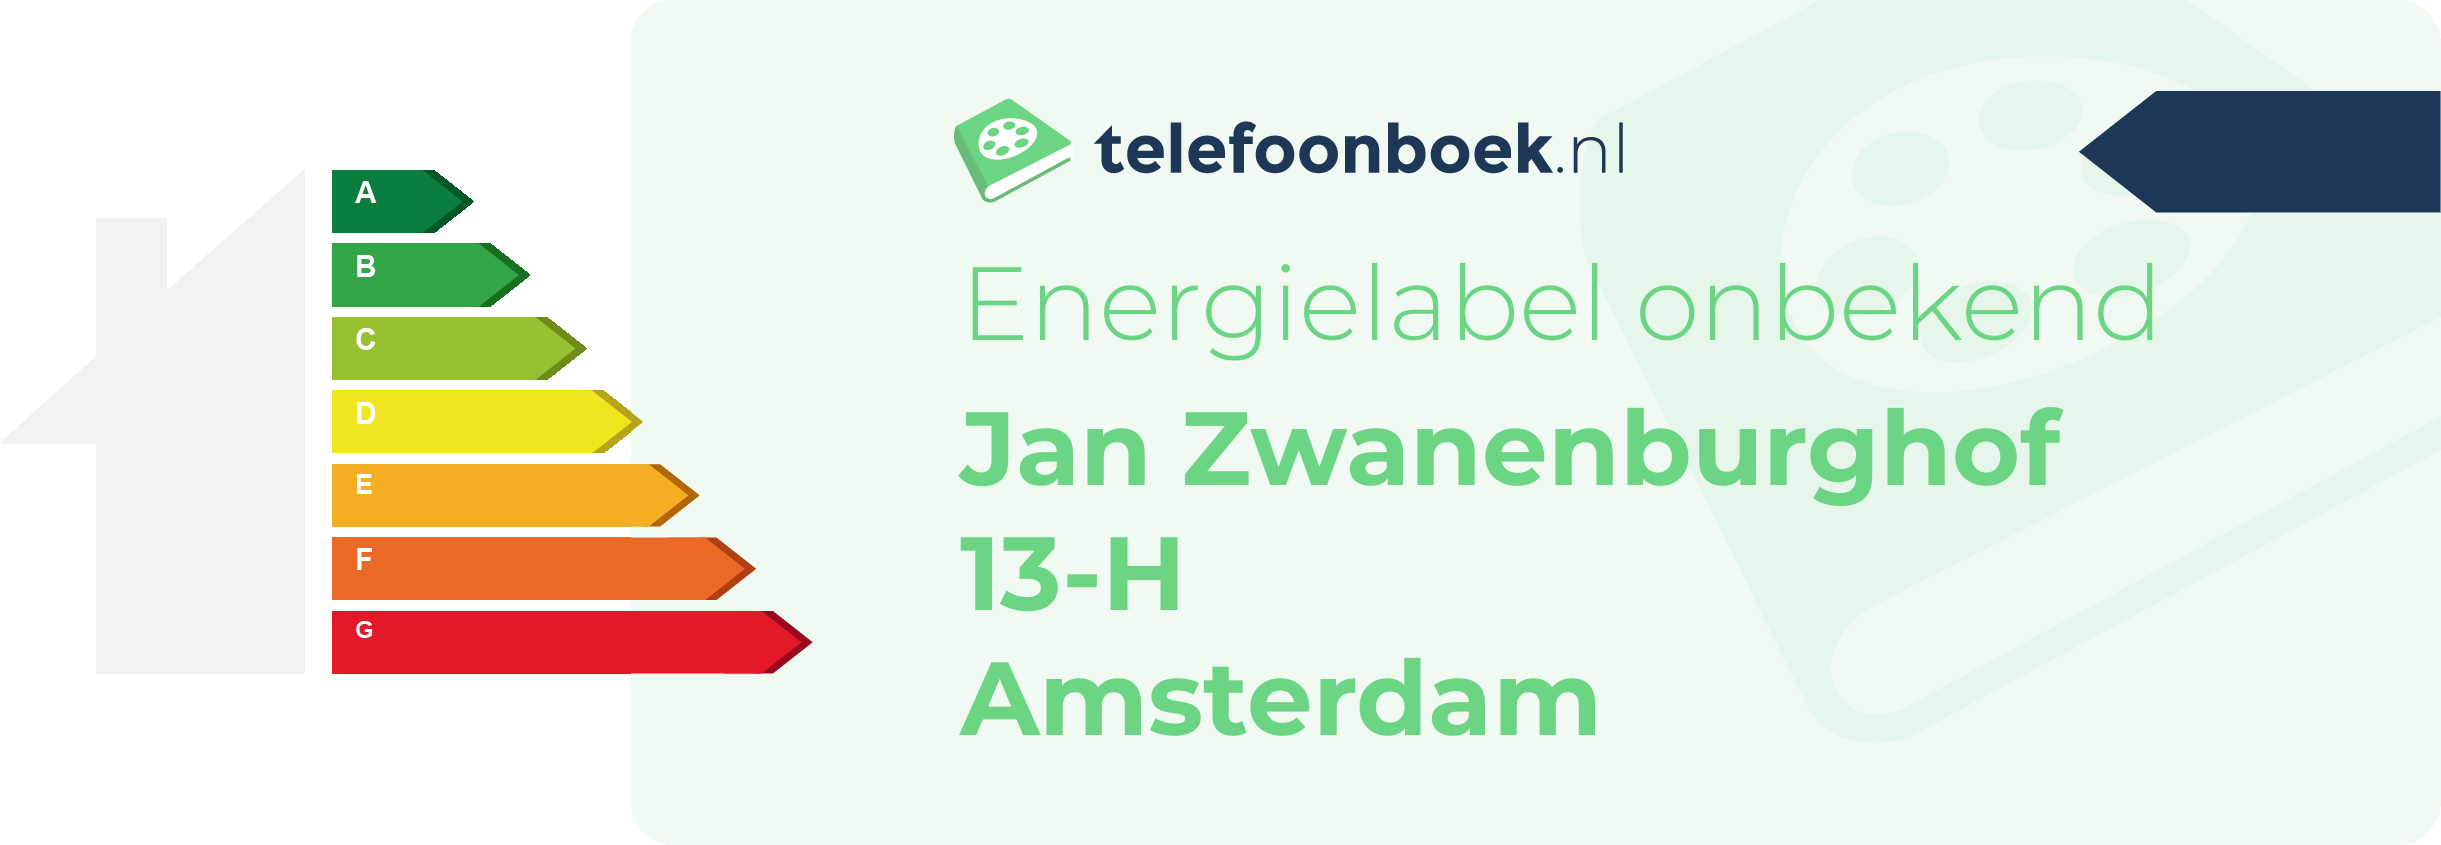 Energielabel Jan Zwanenburghof 13-H Amsterdam